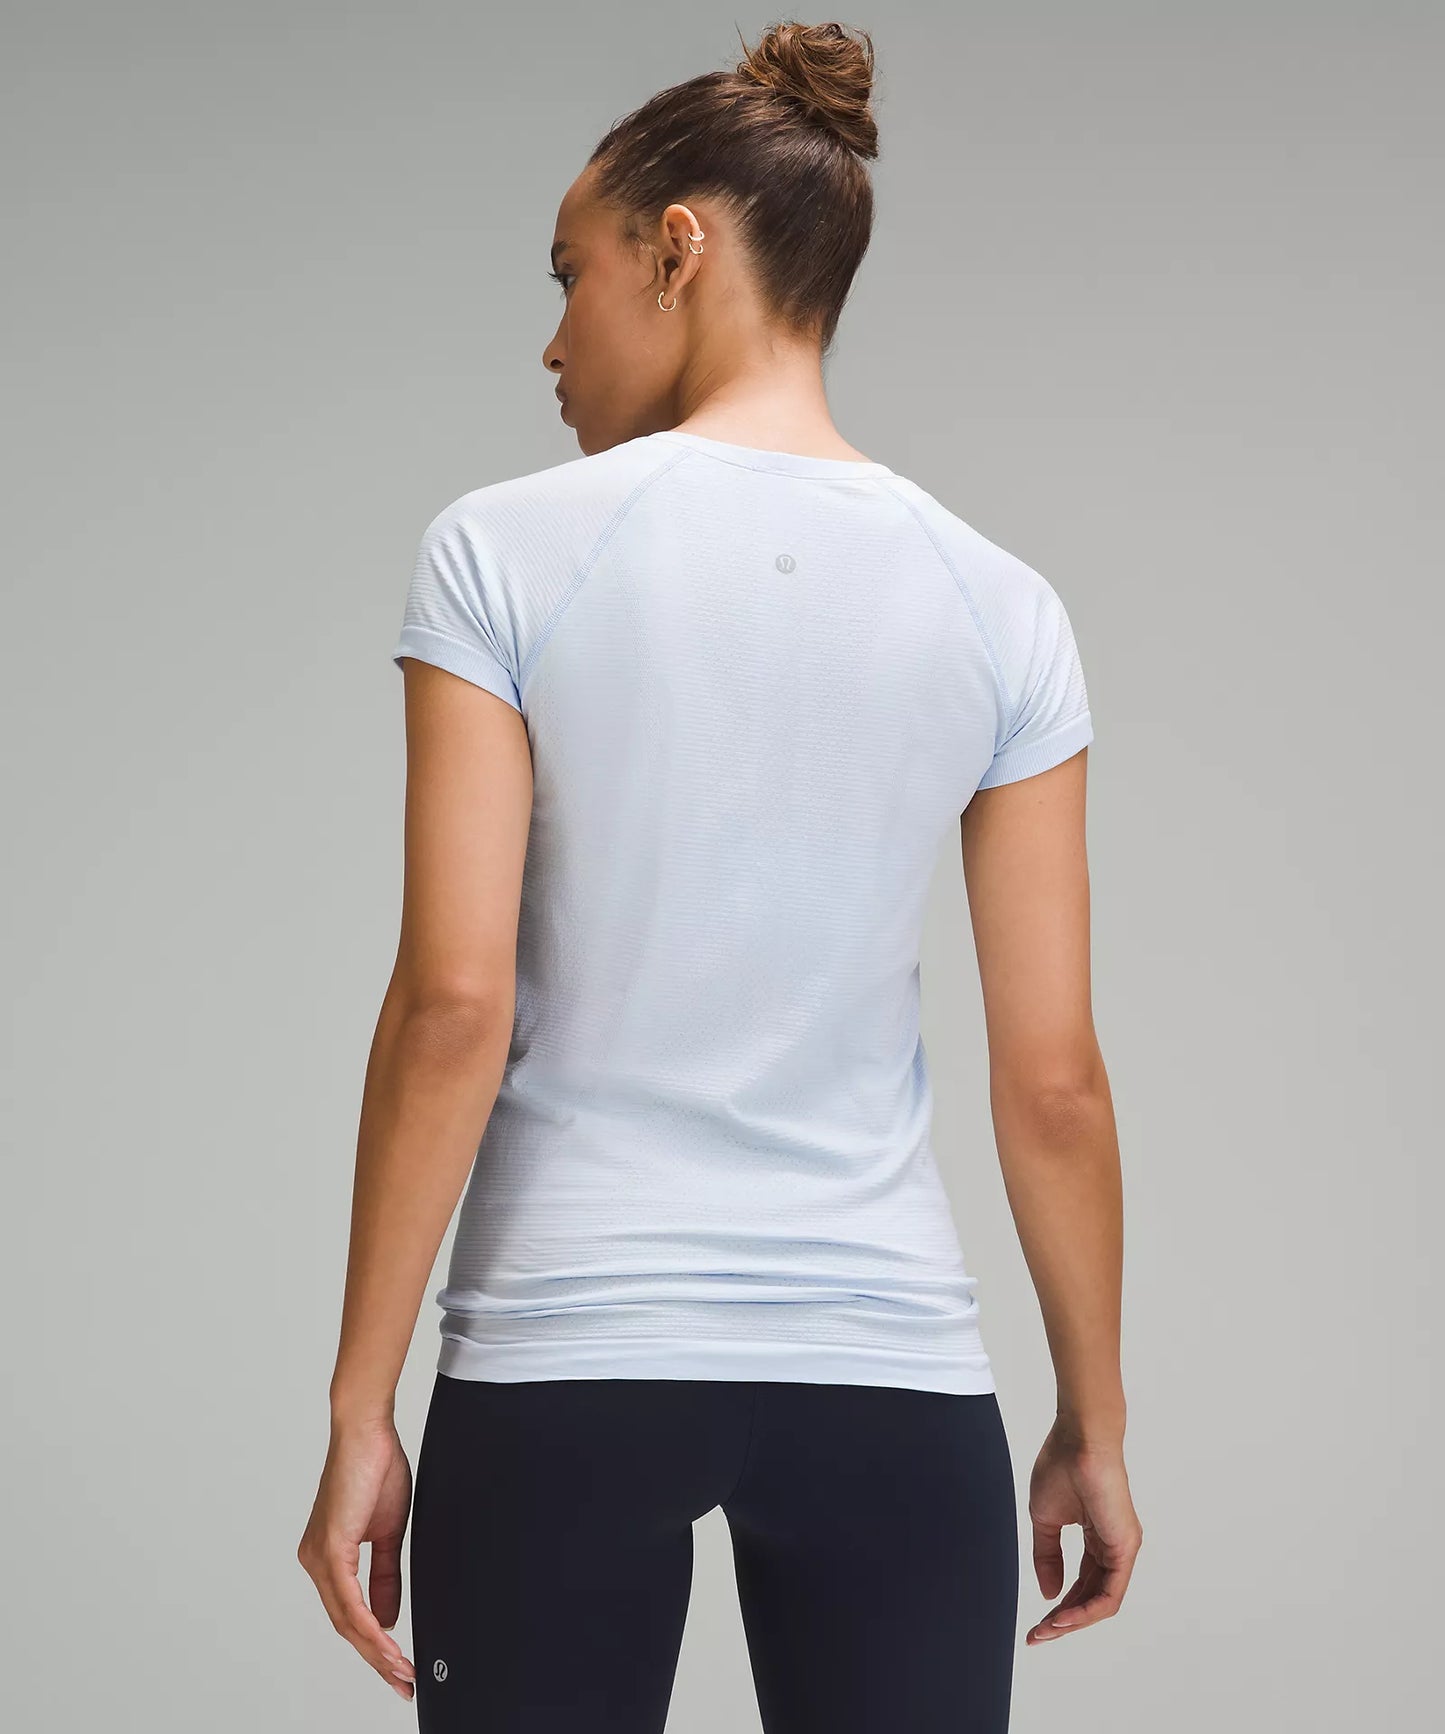 lululemon -  Swiftly Tech Short-Sleeve Shirt 2.0 - White / White